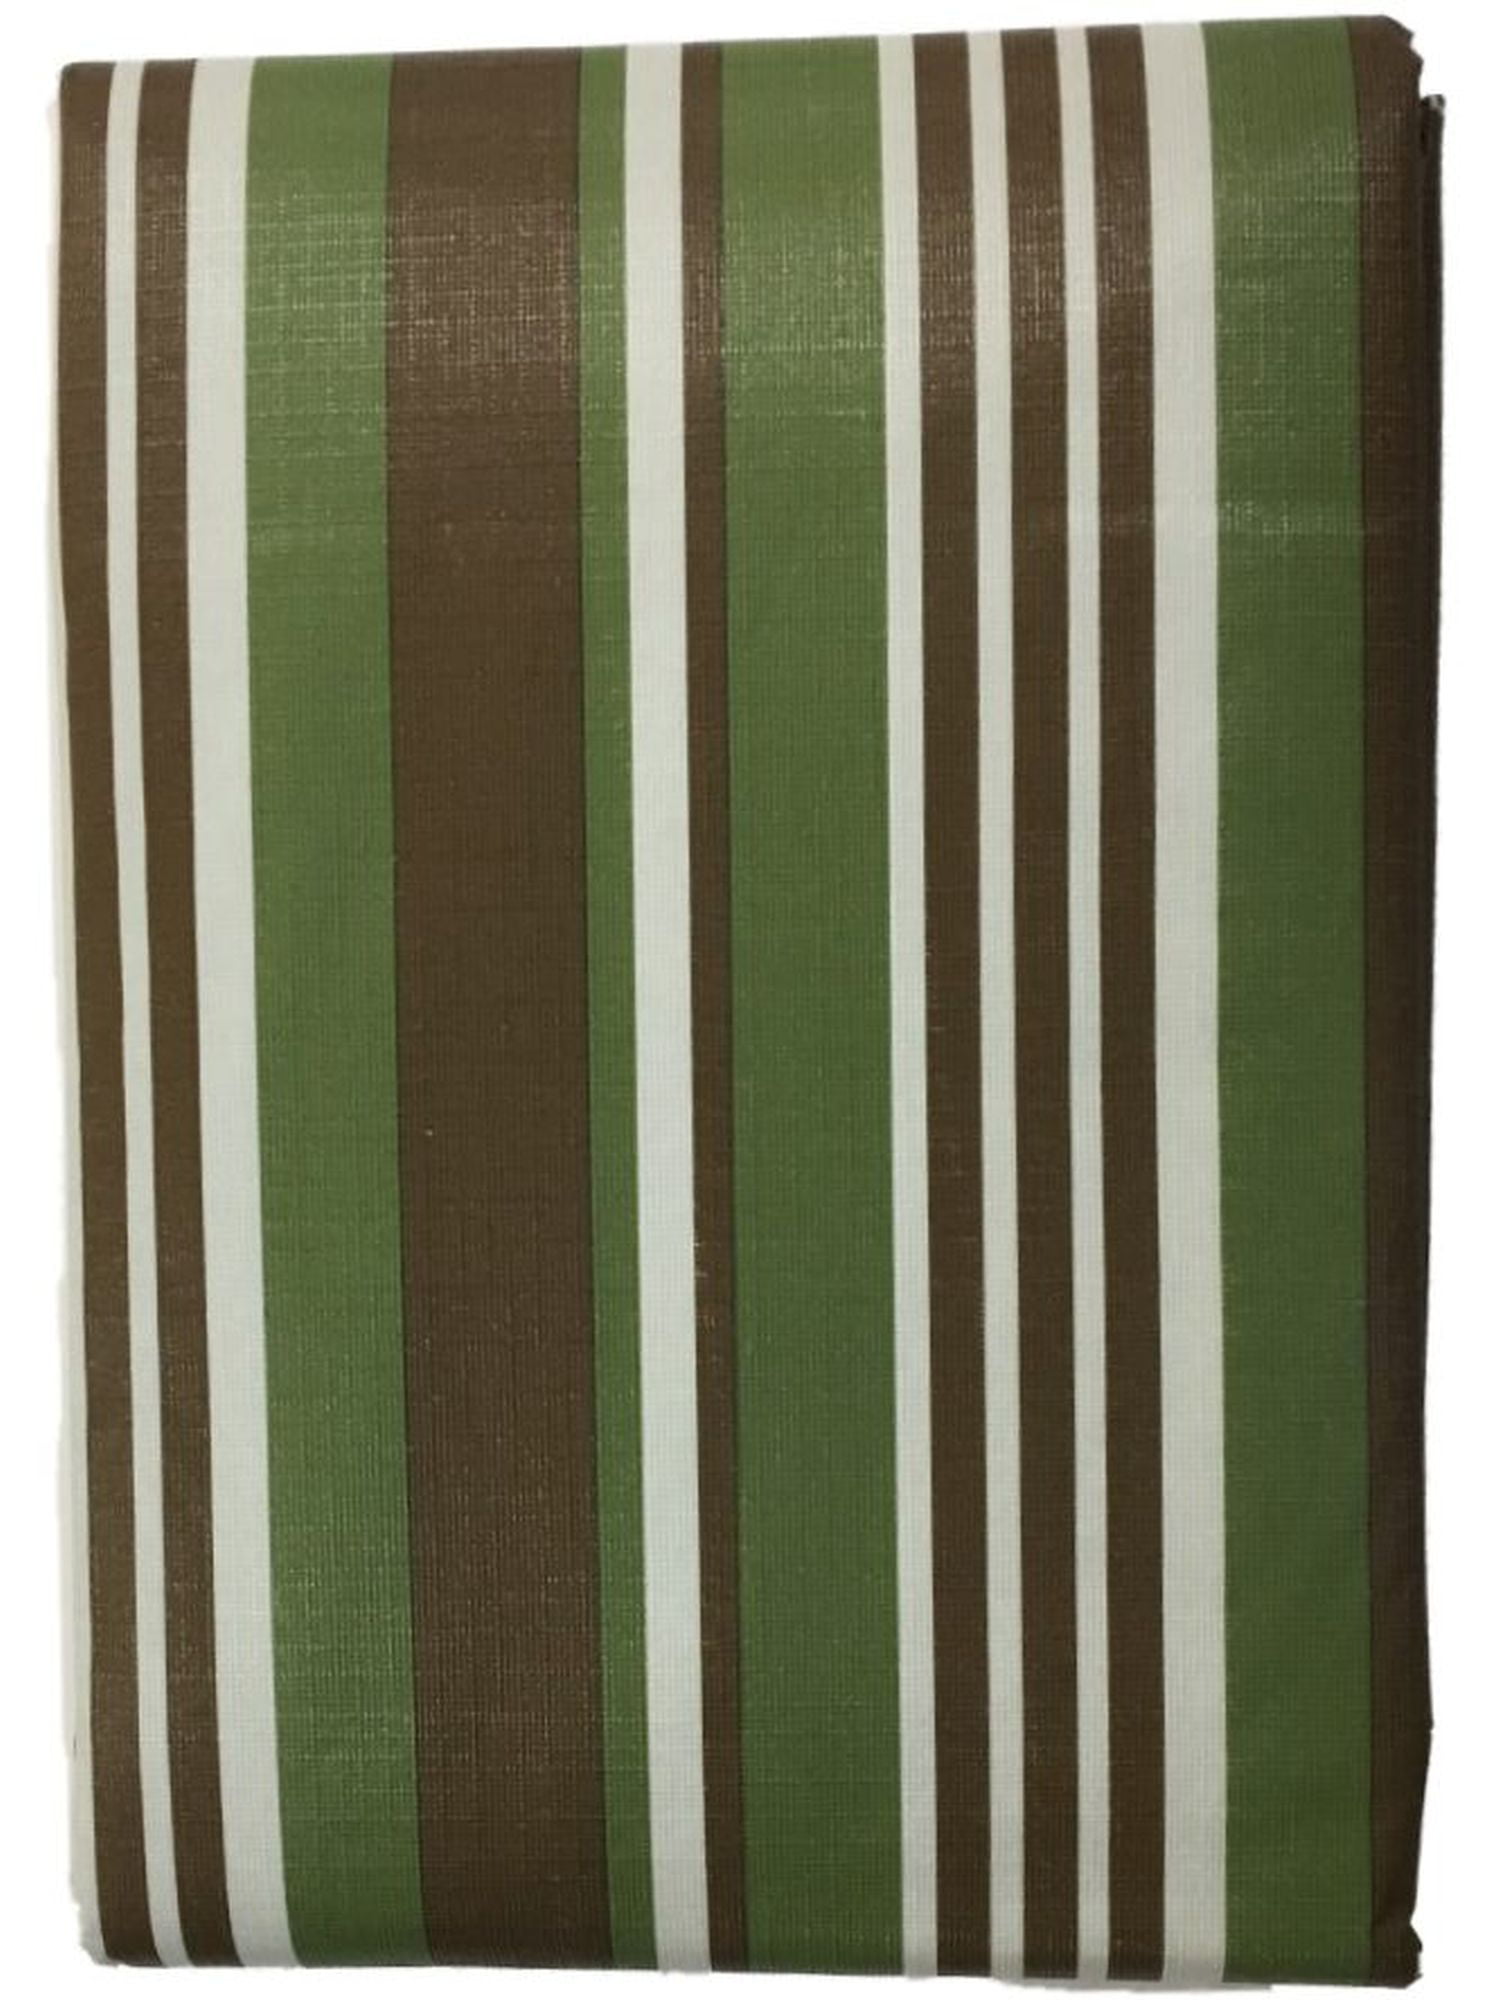 NorthCrest Green & Brown Stripe Tablecloth, Vinyl